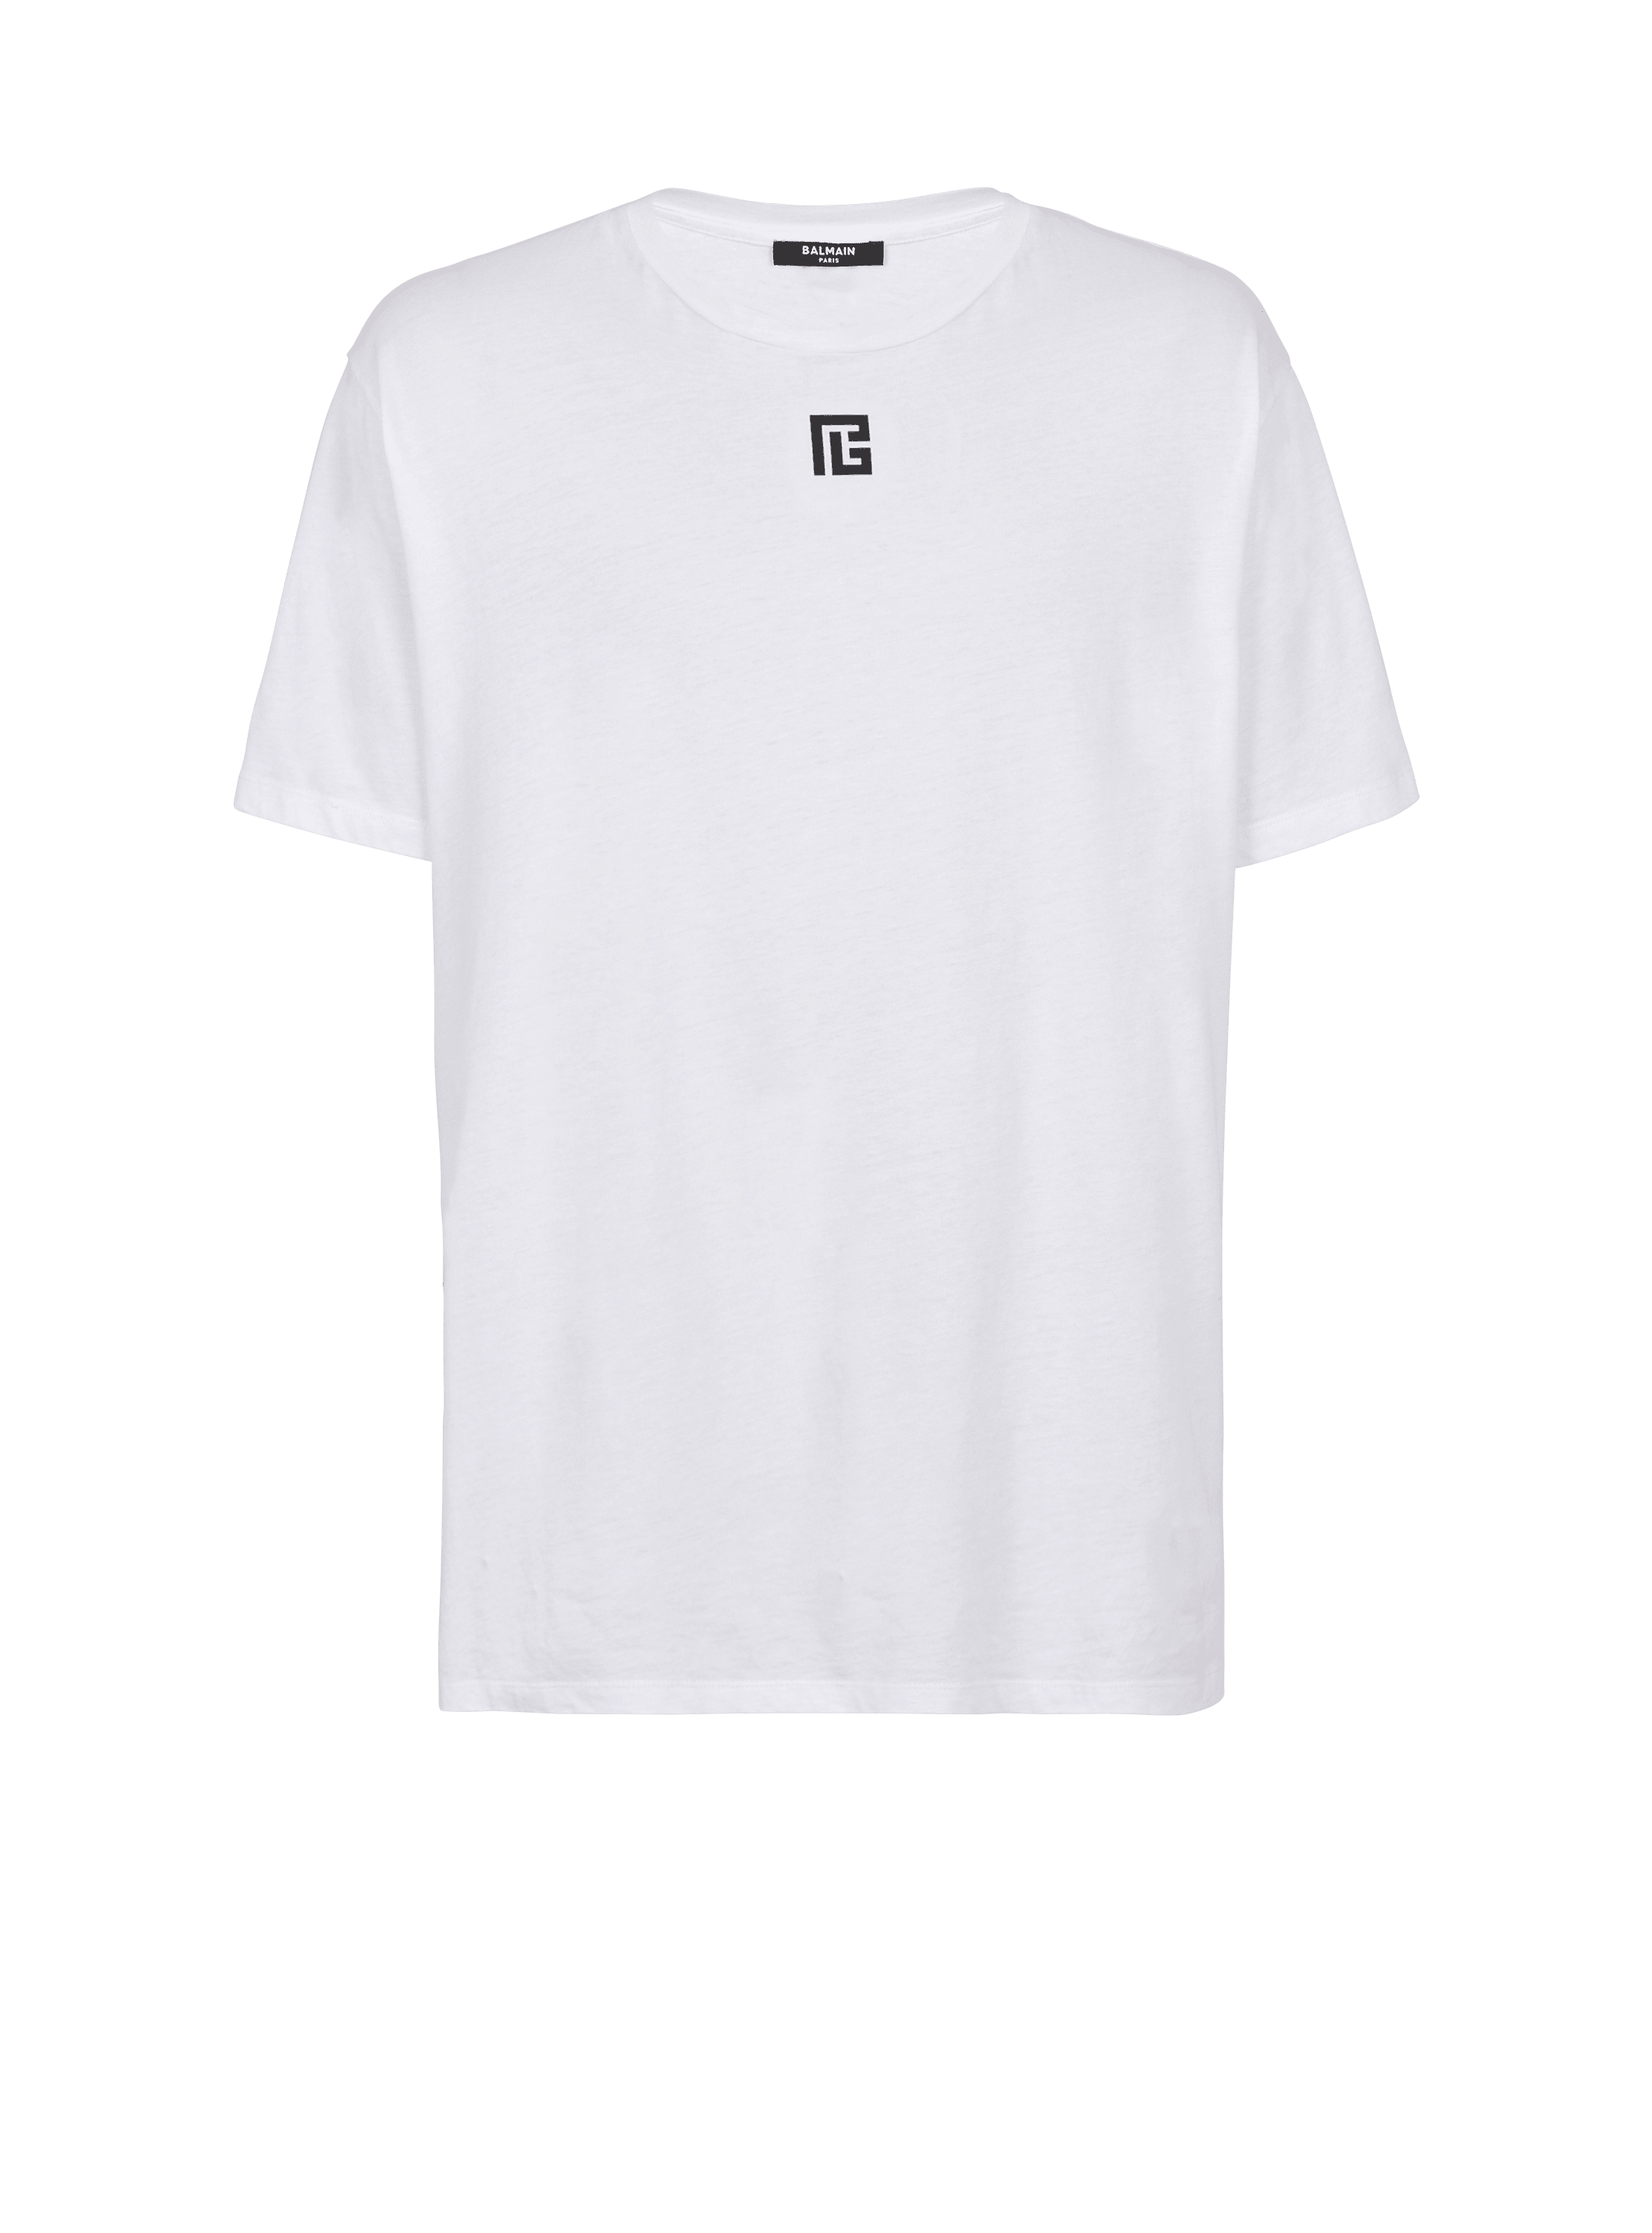 T-shirt oversize en coton imprimé maxi logo Balmain, blanc, hi-res